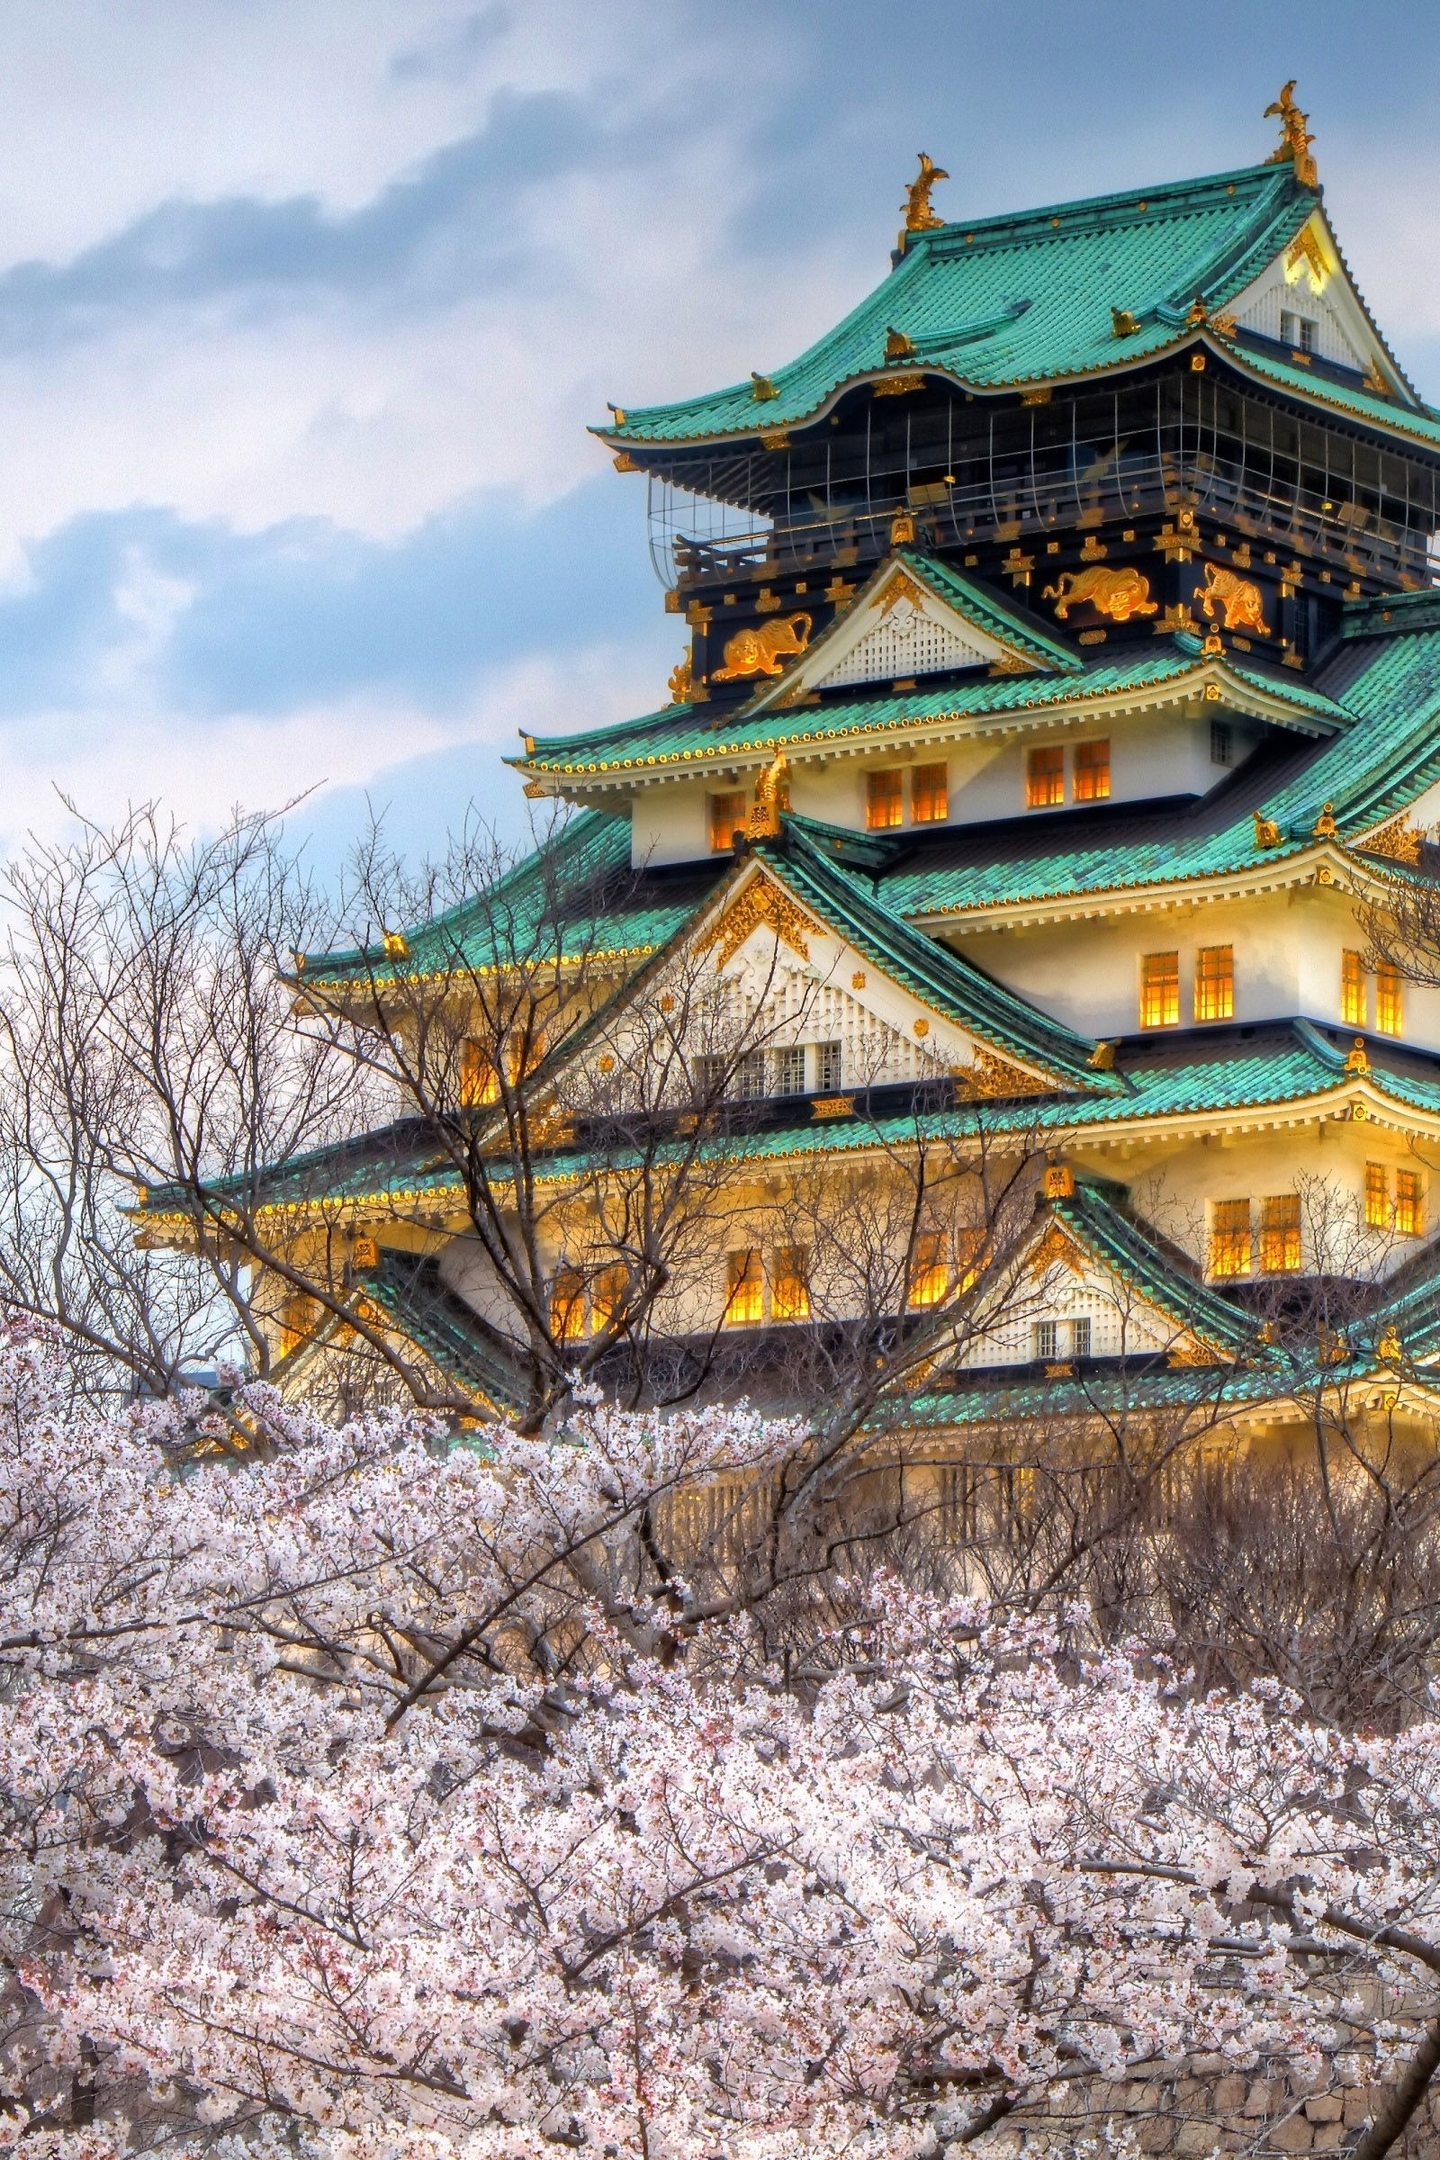 Картинка: Осака, Япония, замок, крыша, сакура, цветение, деревья, небо, облака